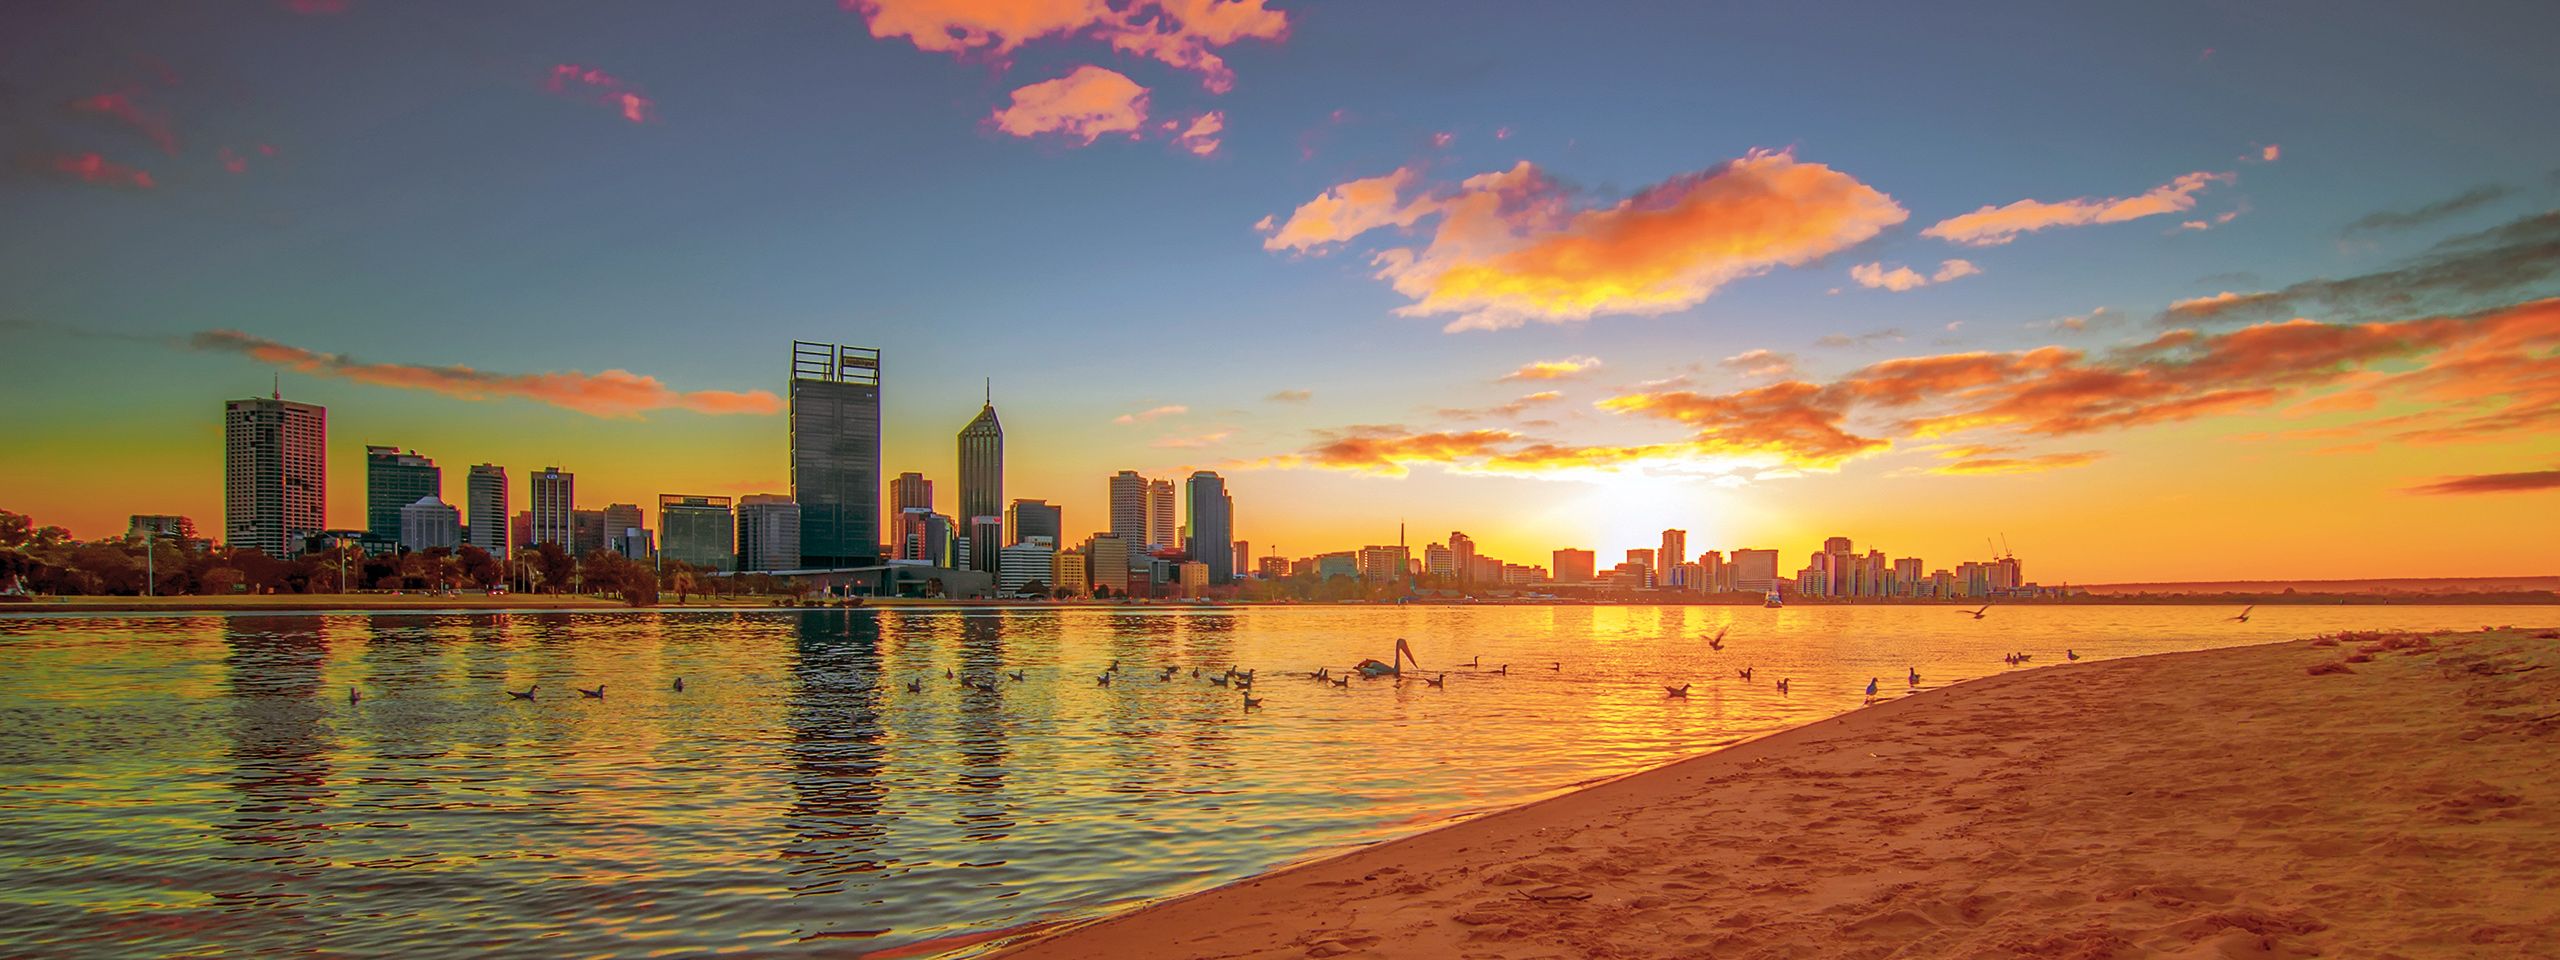 Perth skyline at sunset